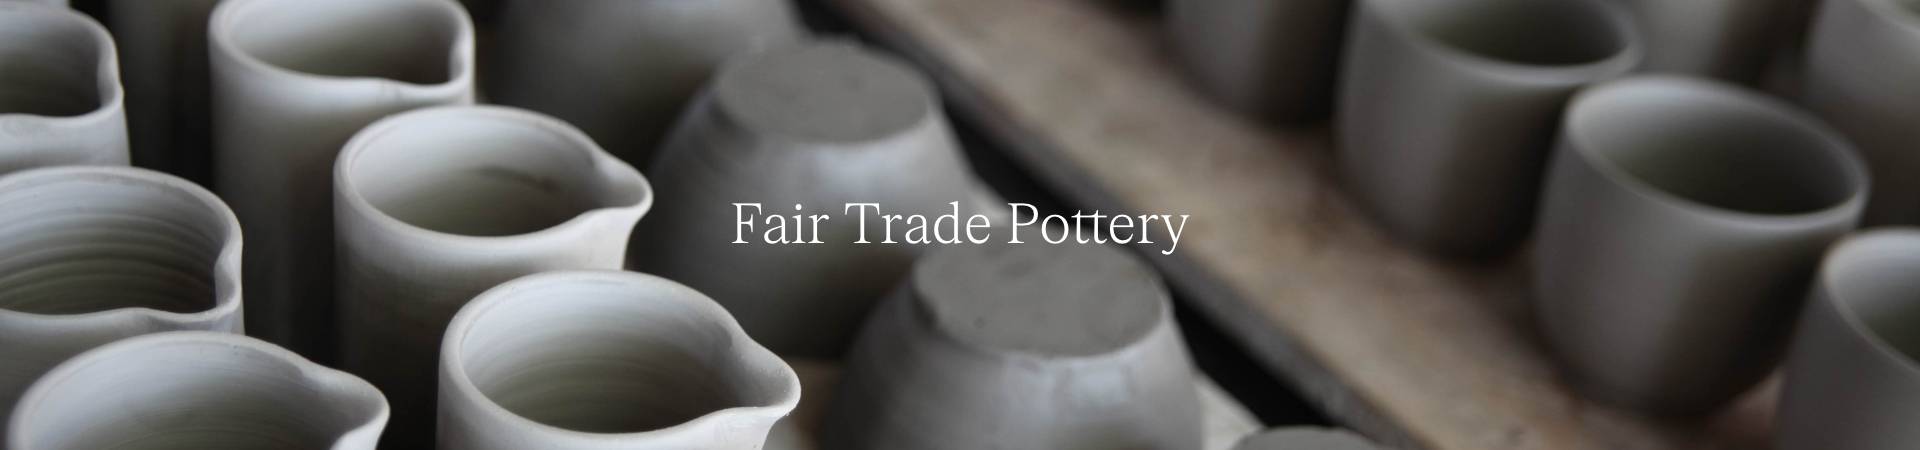 Fair Trade Pottery.jpg